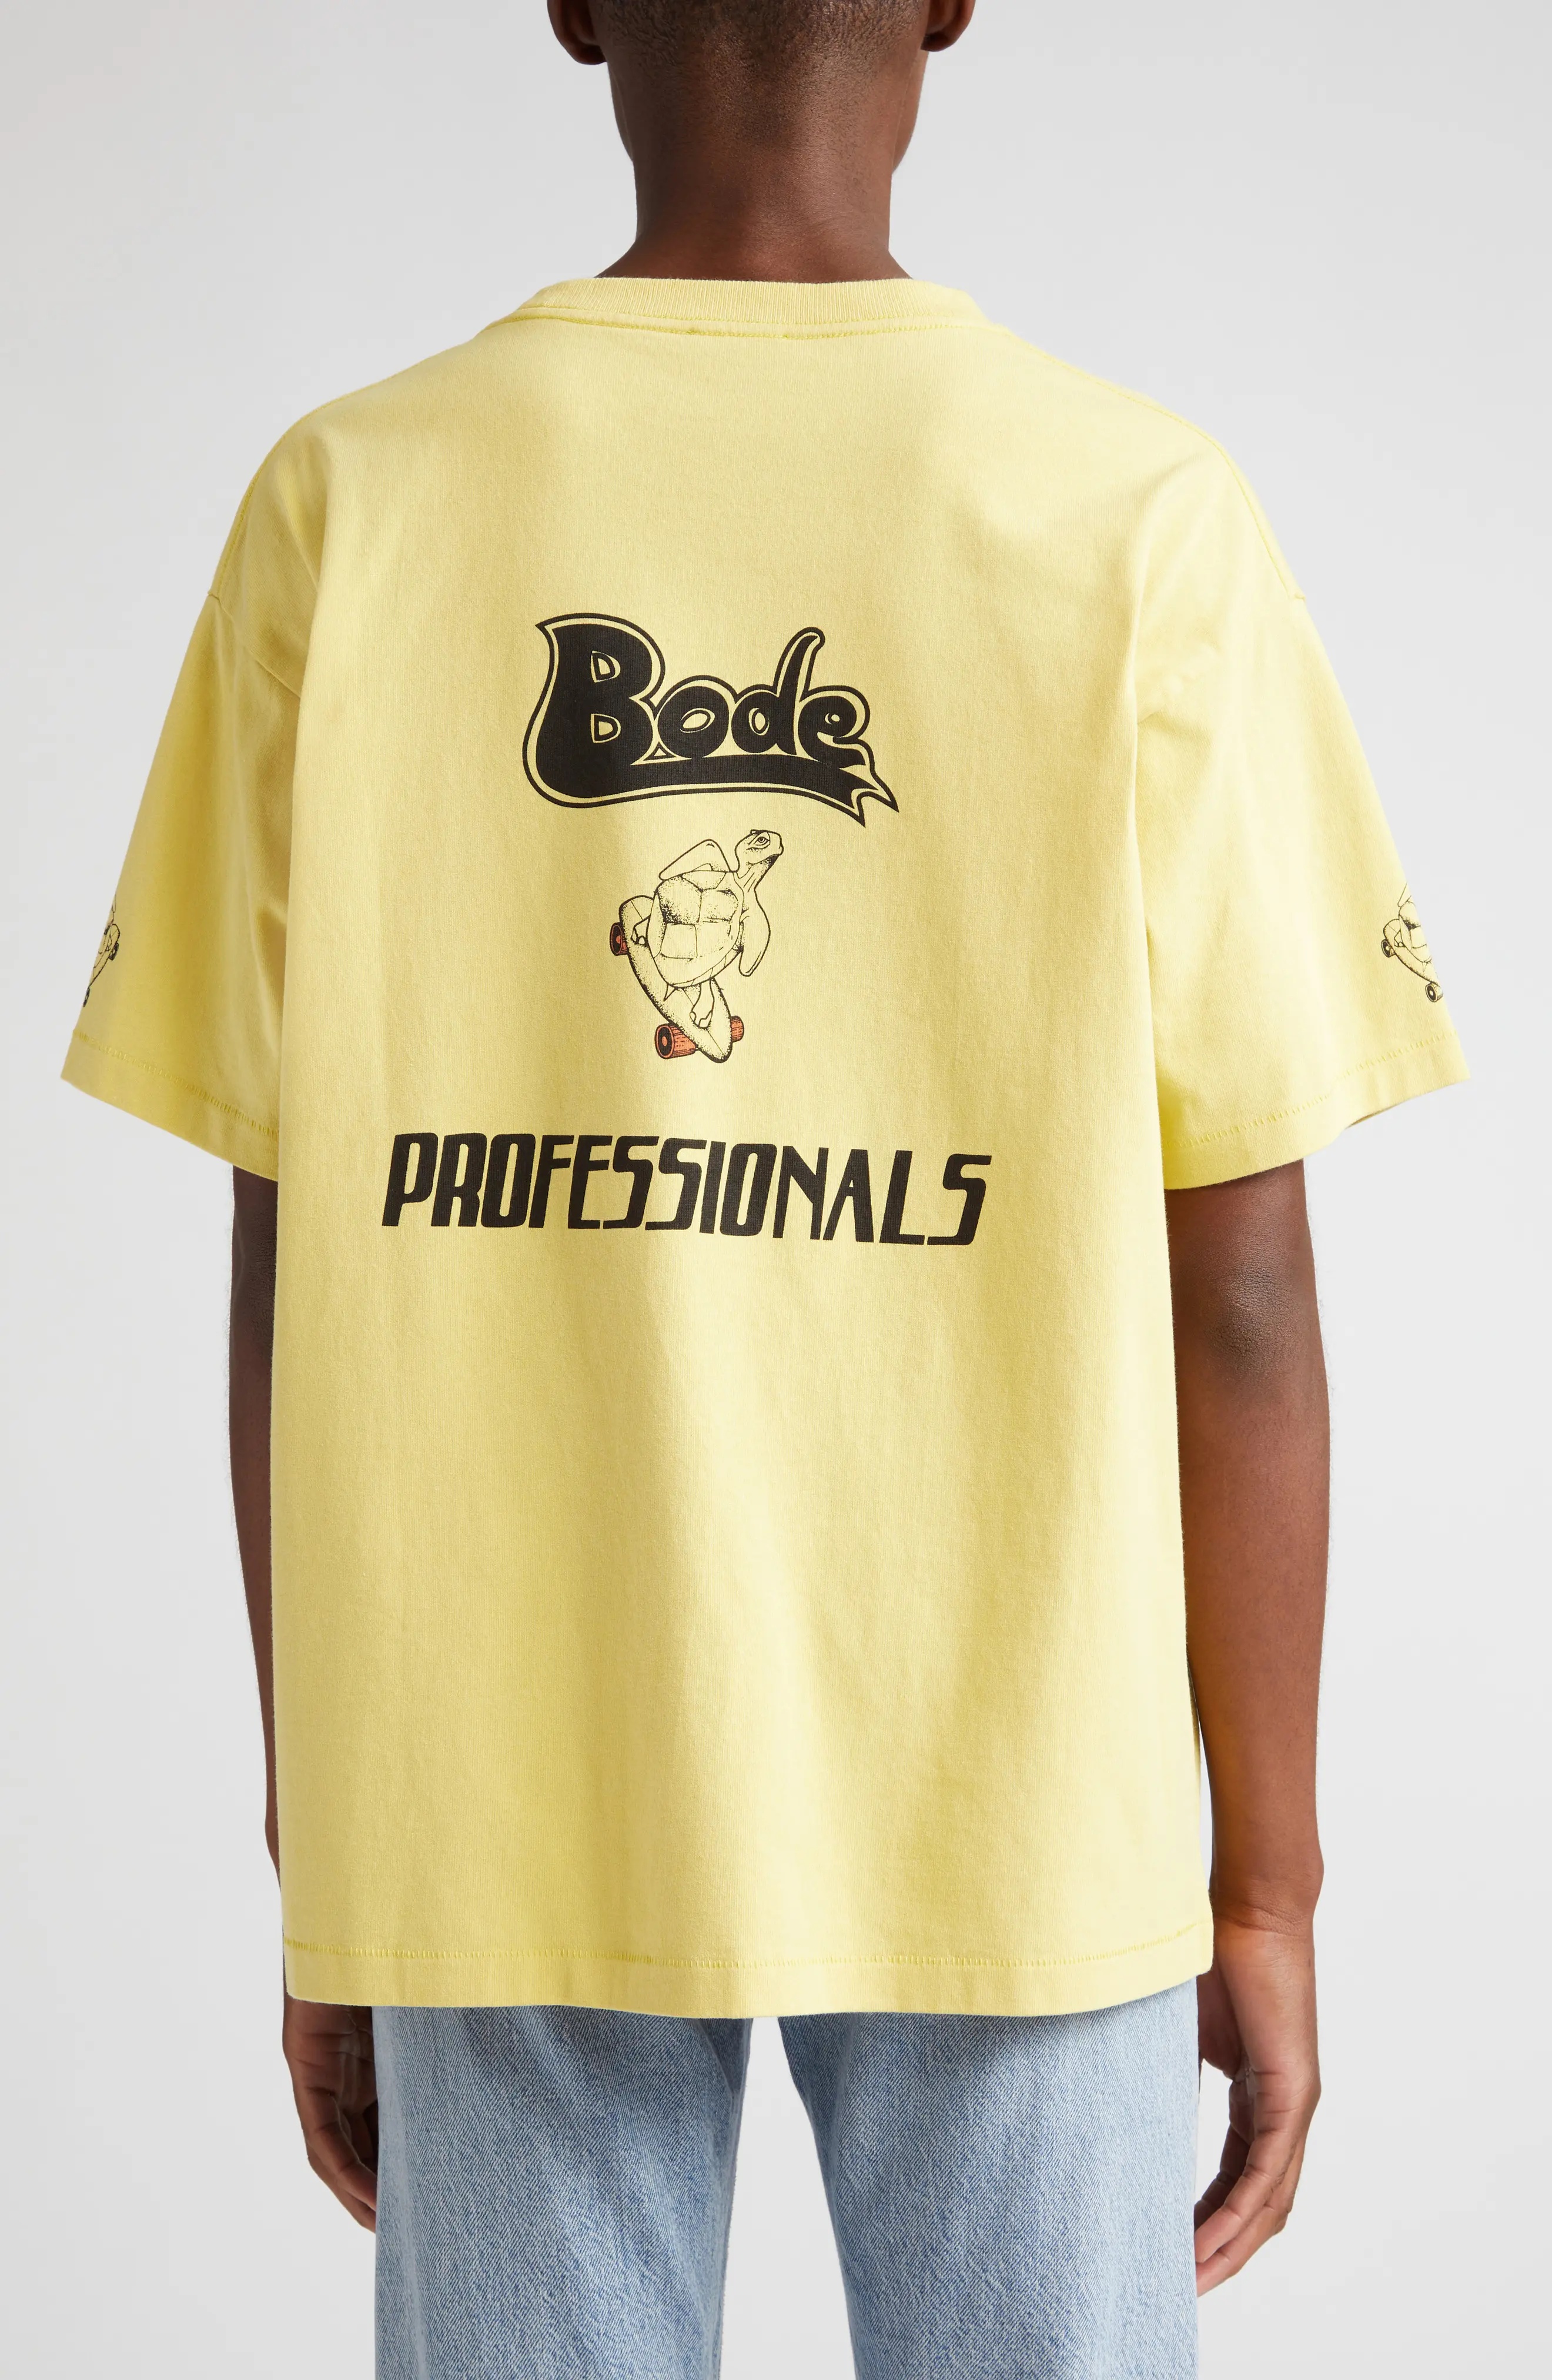 Professionals Graphic T-Shirt - 2